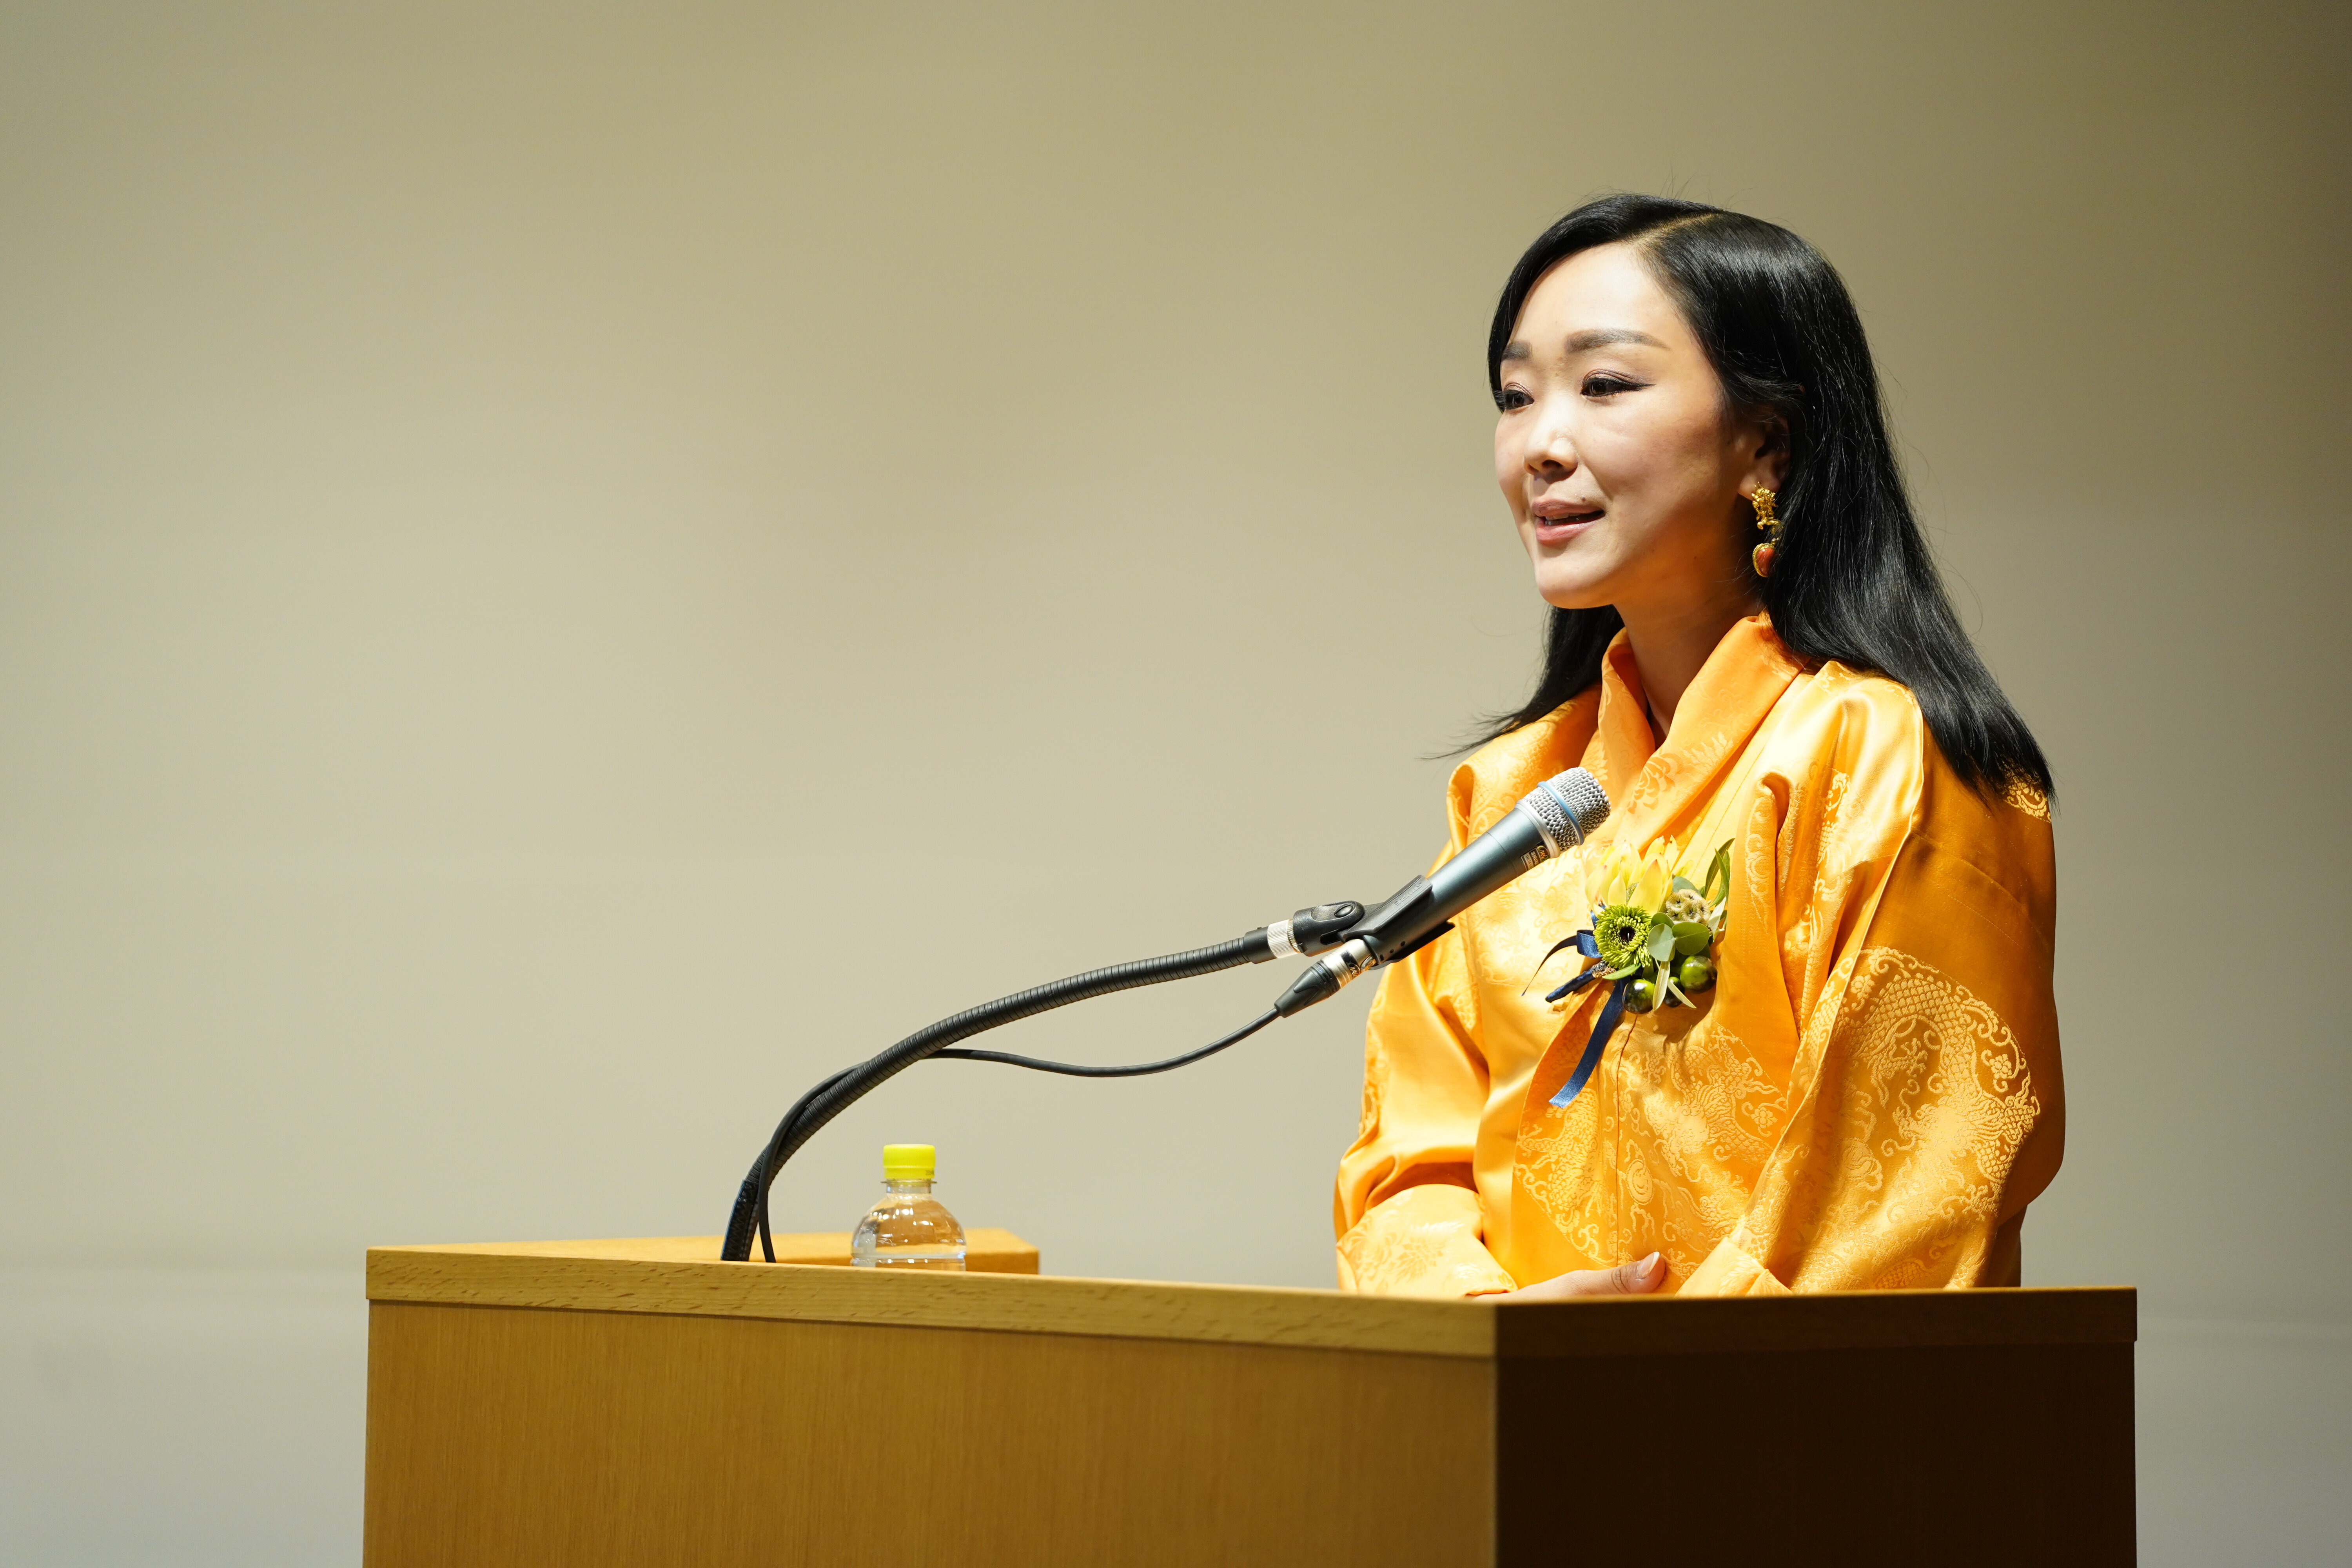 the Royal Representative of HRH Princess Sonam Dechan Wangchuck